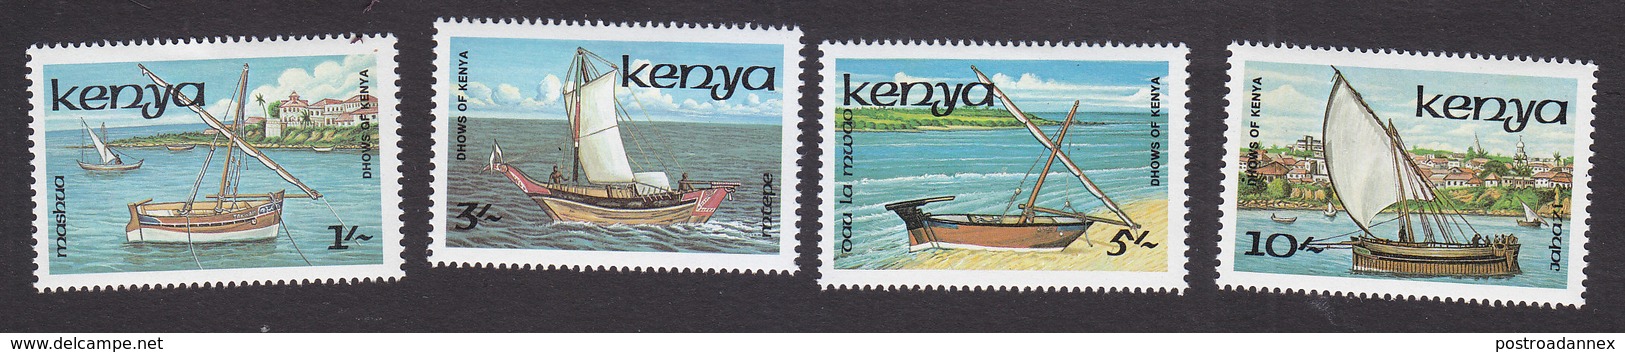 Kenya, Scott #384-387, Mint Hinged, Ships, Issued 1986 - Kenya (1963-...)